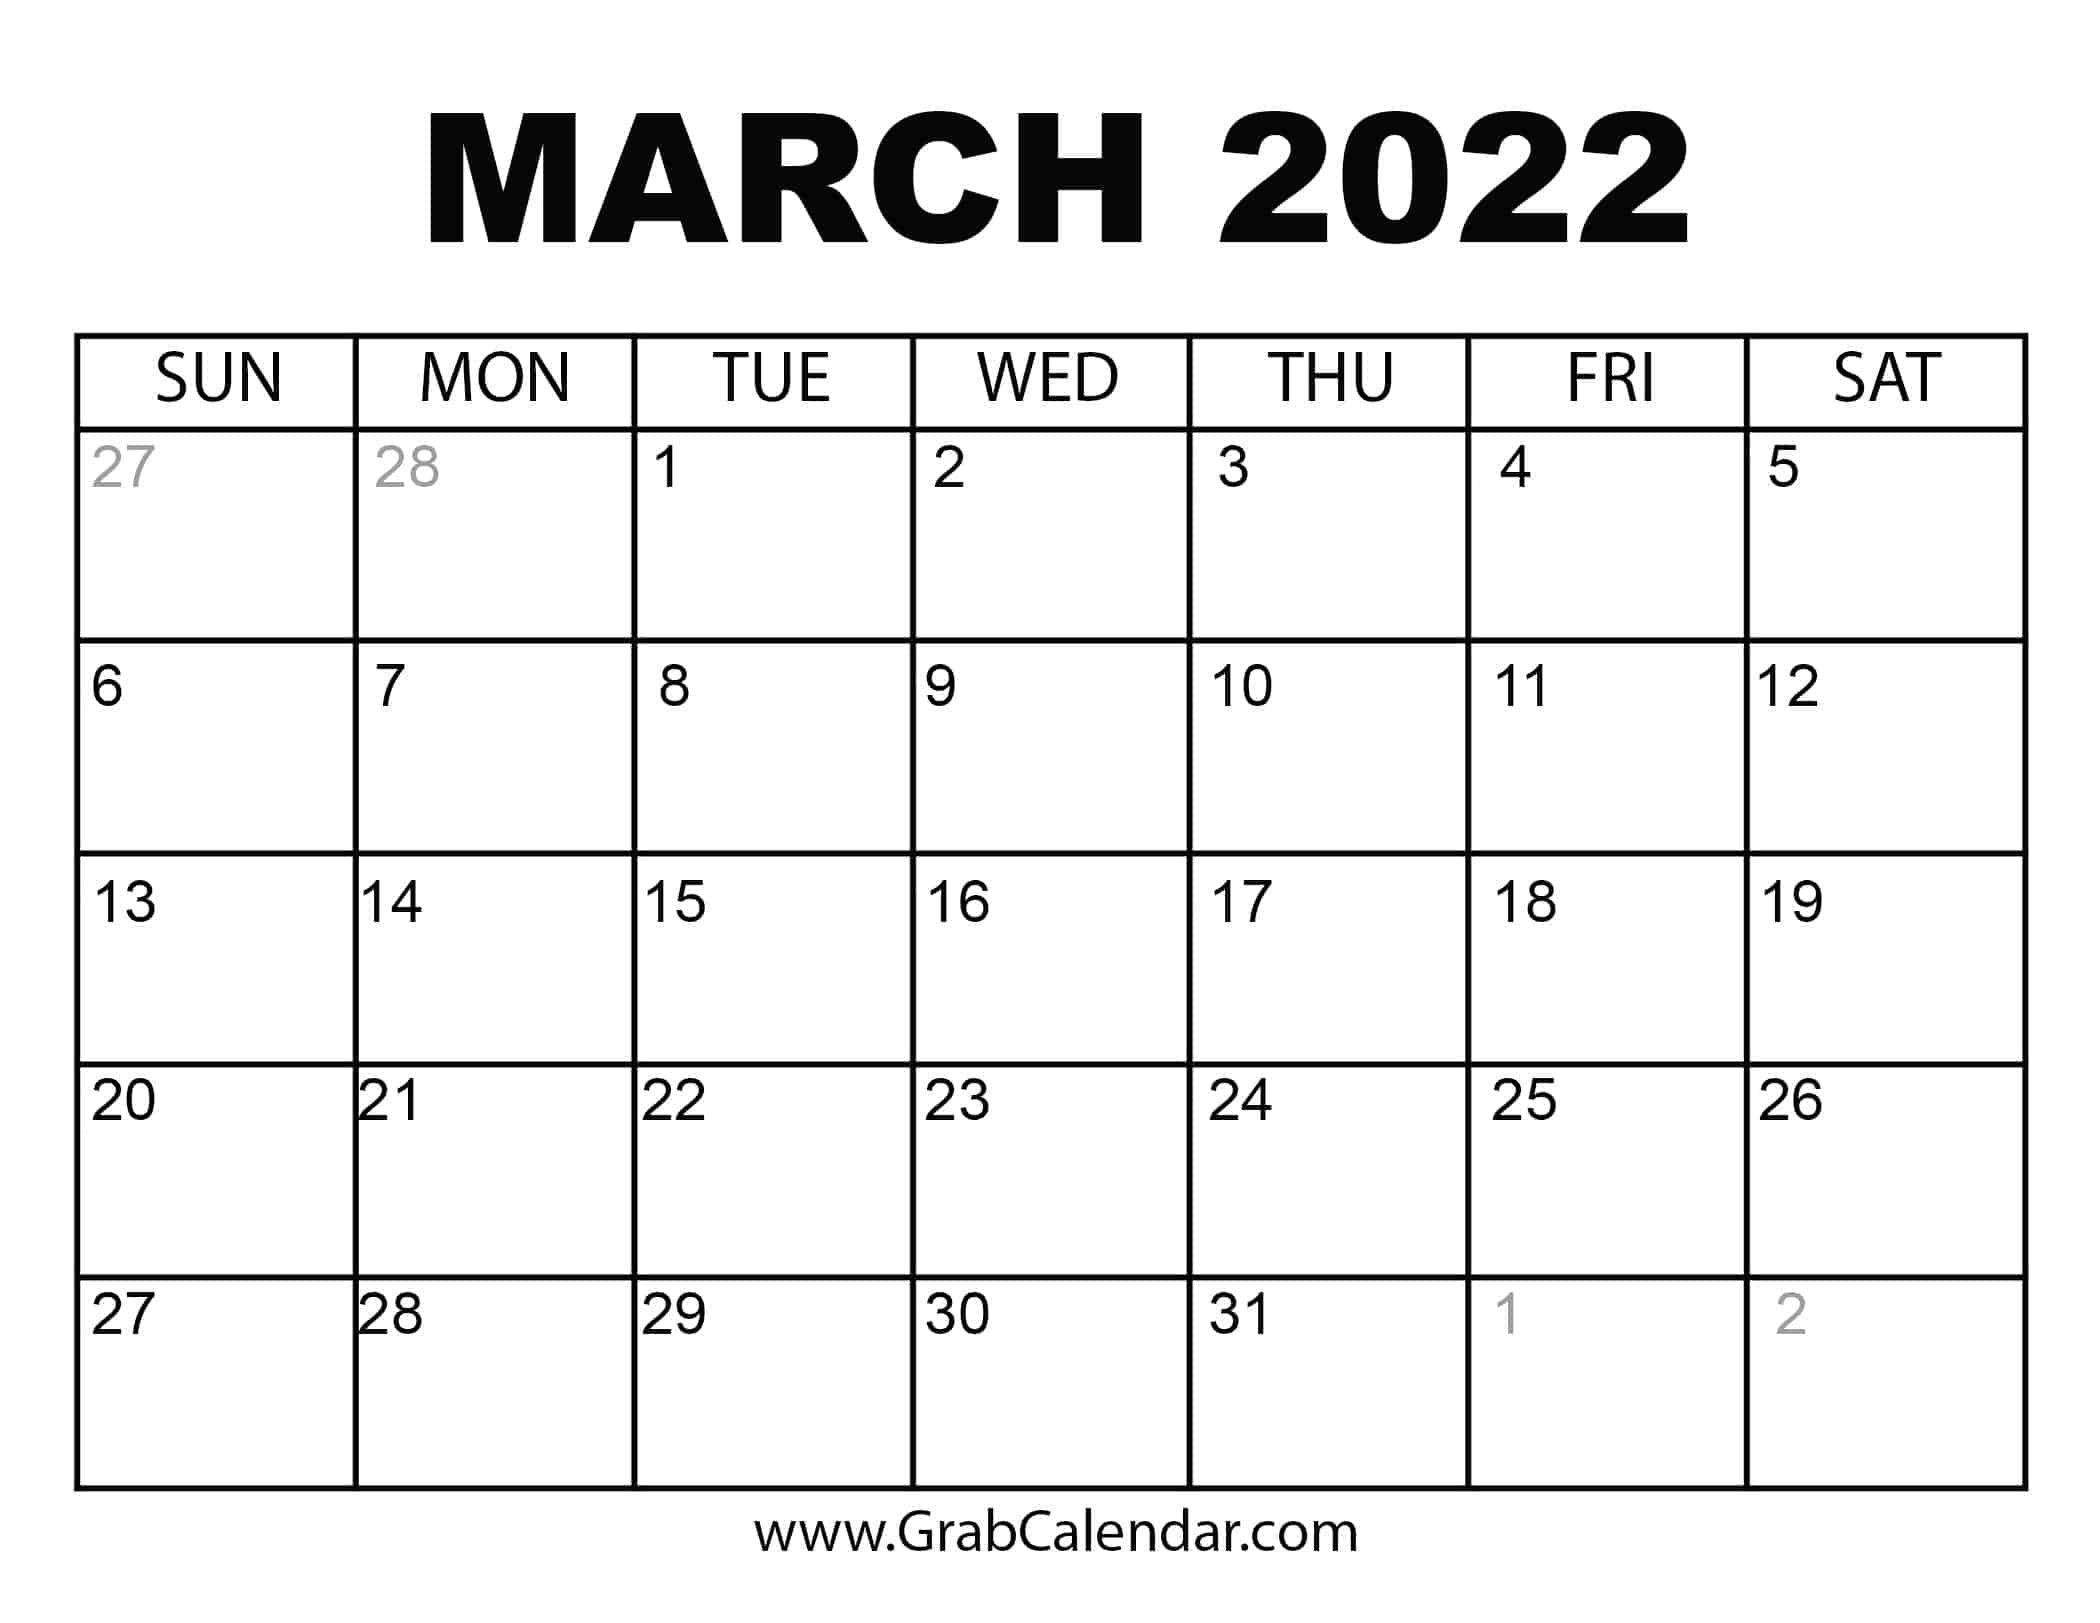 March 2022 Calendar Page Printable March 2022 Calendar